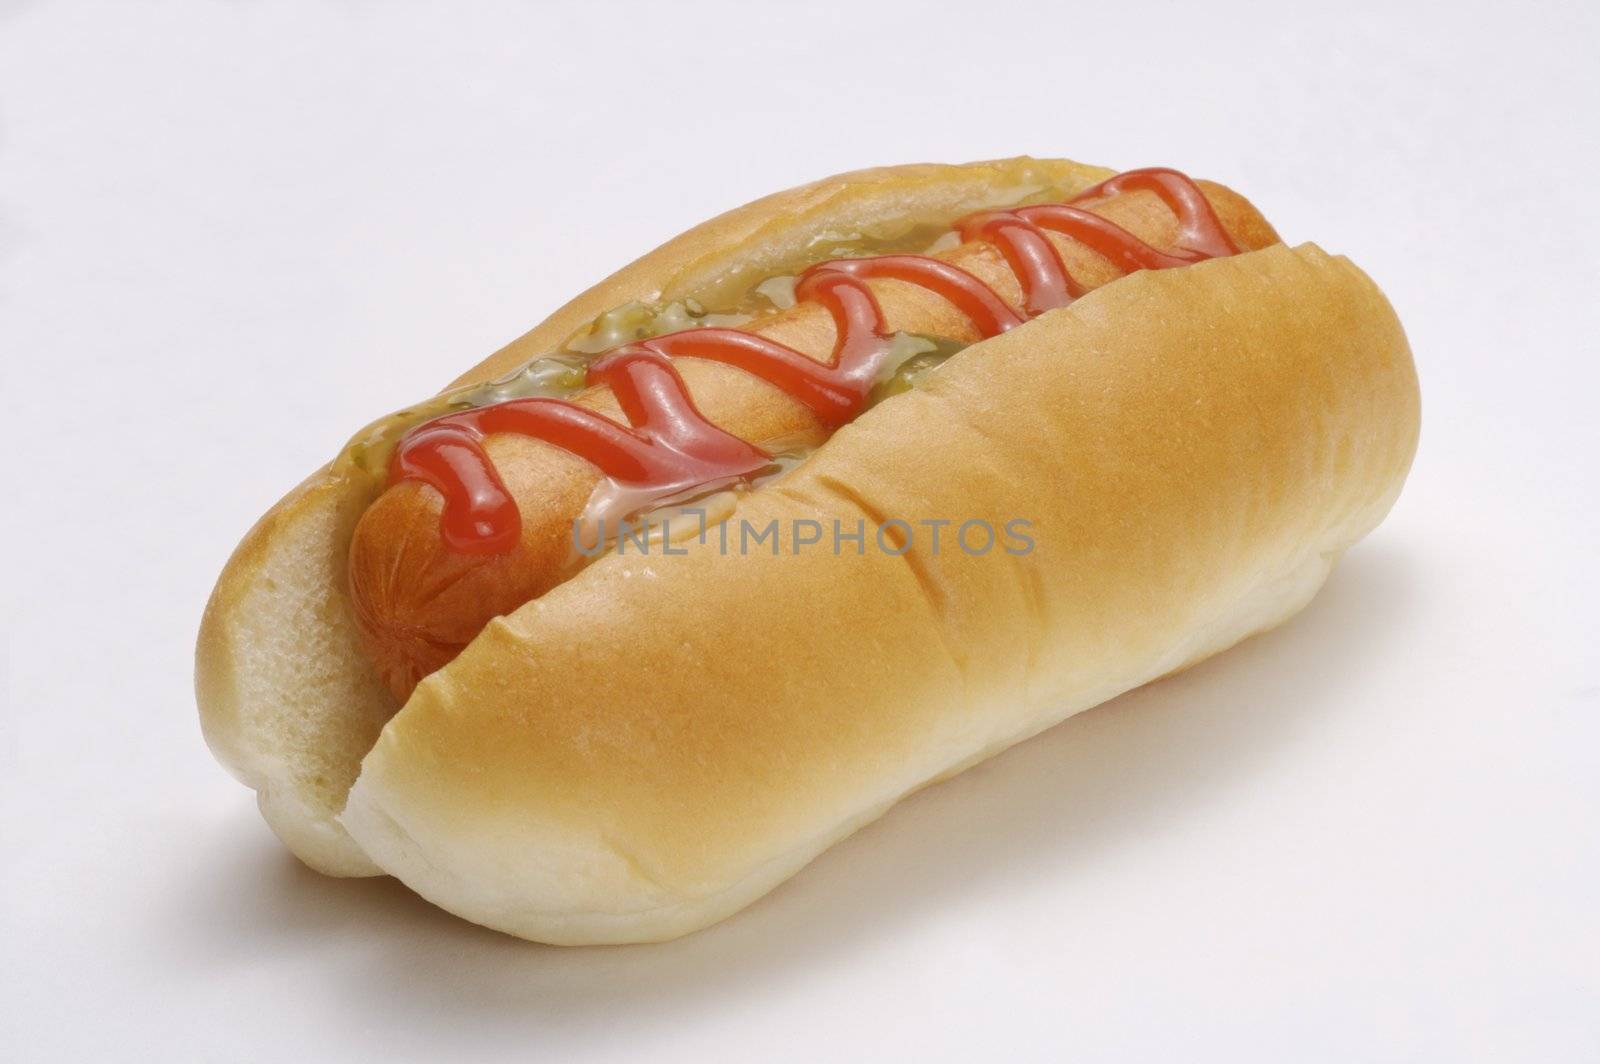 Hot dog by Baltus